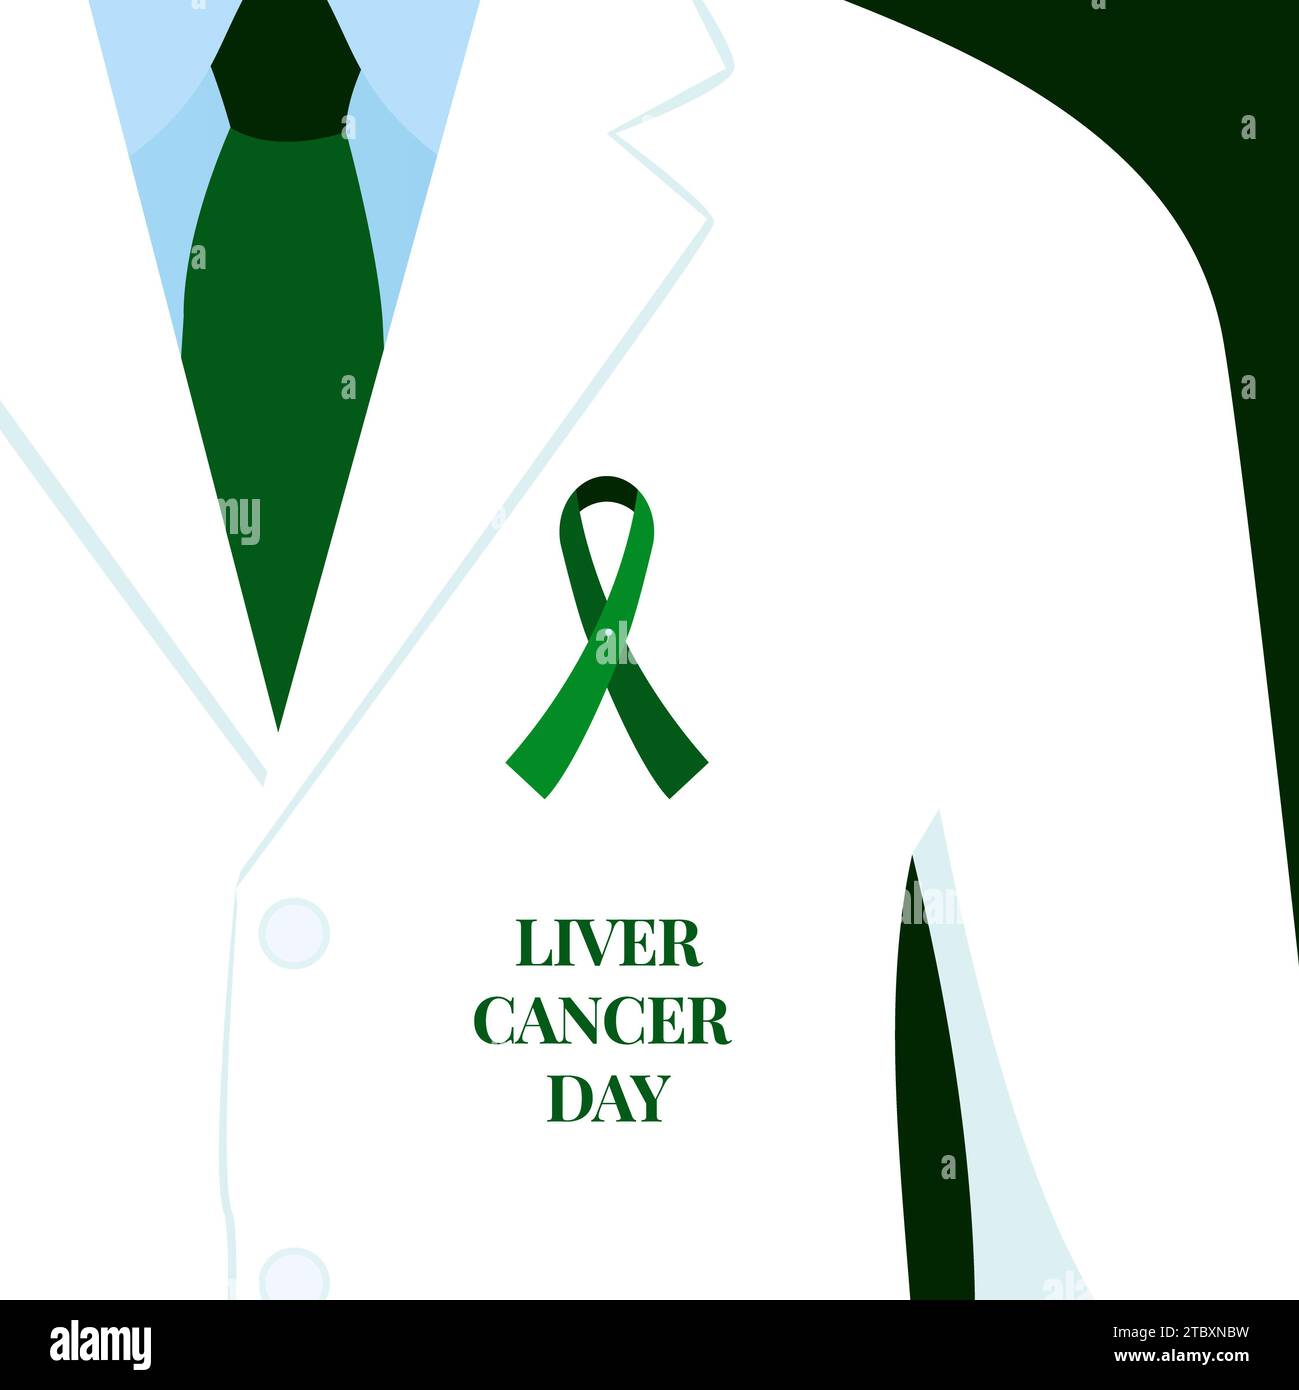 Liver cancer, conceptual illustration Stock Photo